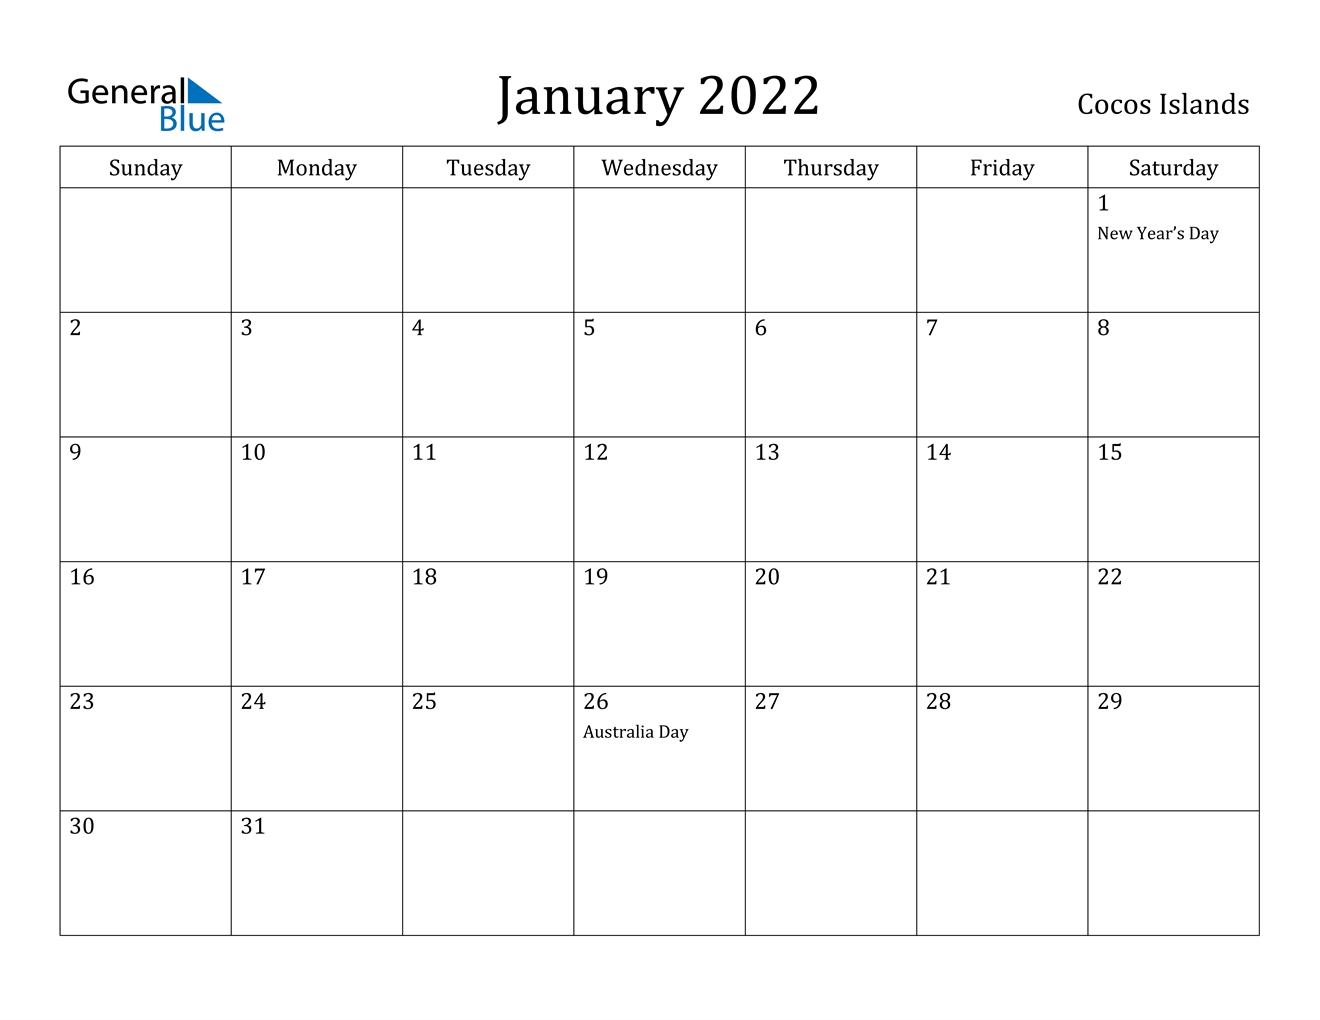 January 2022 Calendar - Cocos Islands